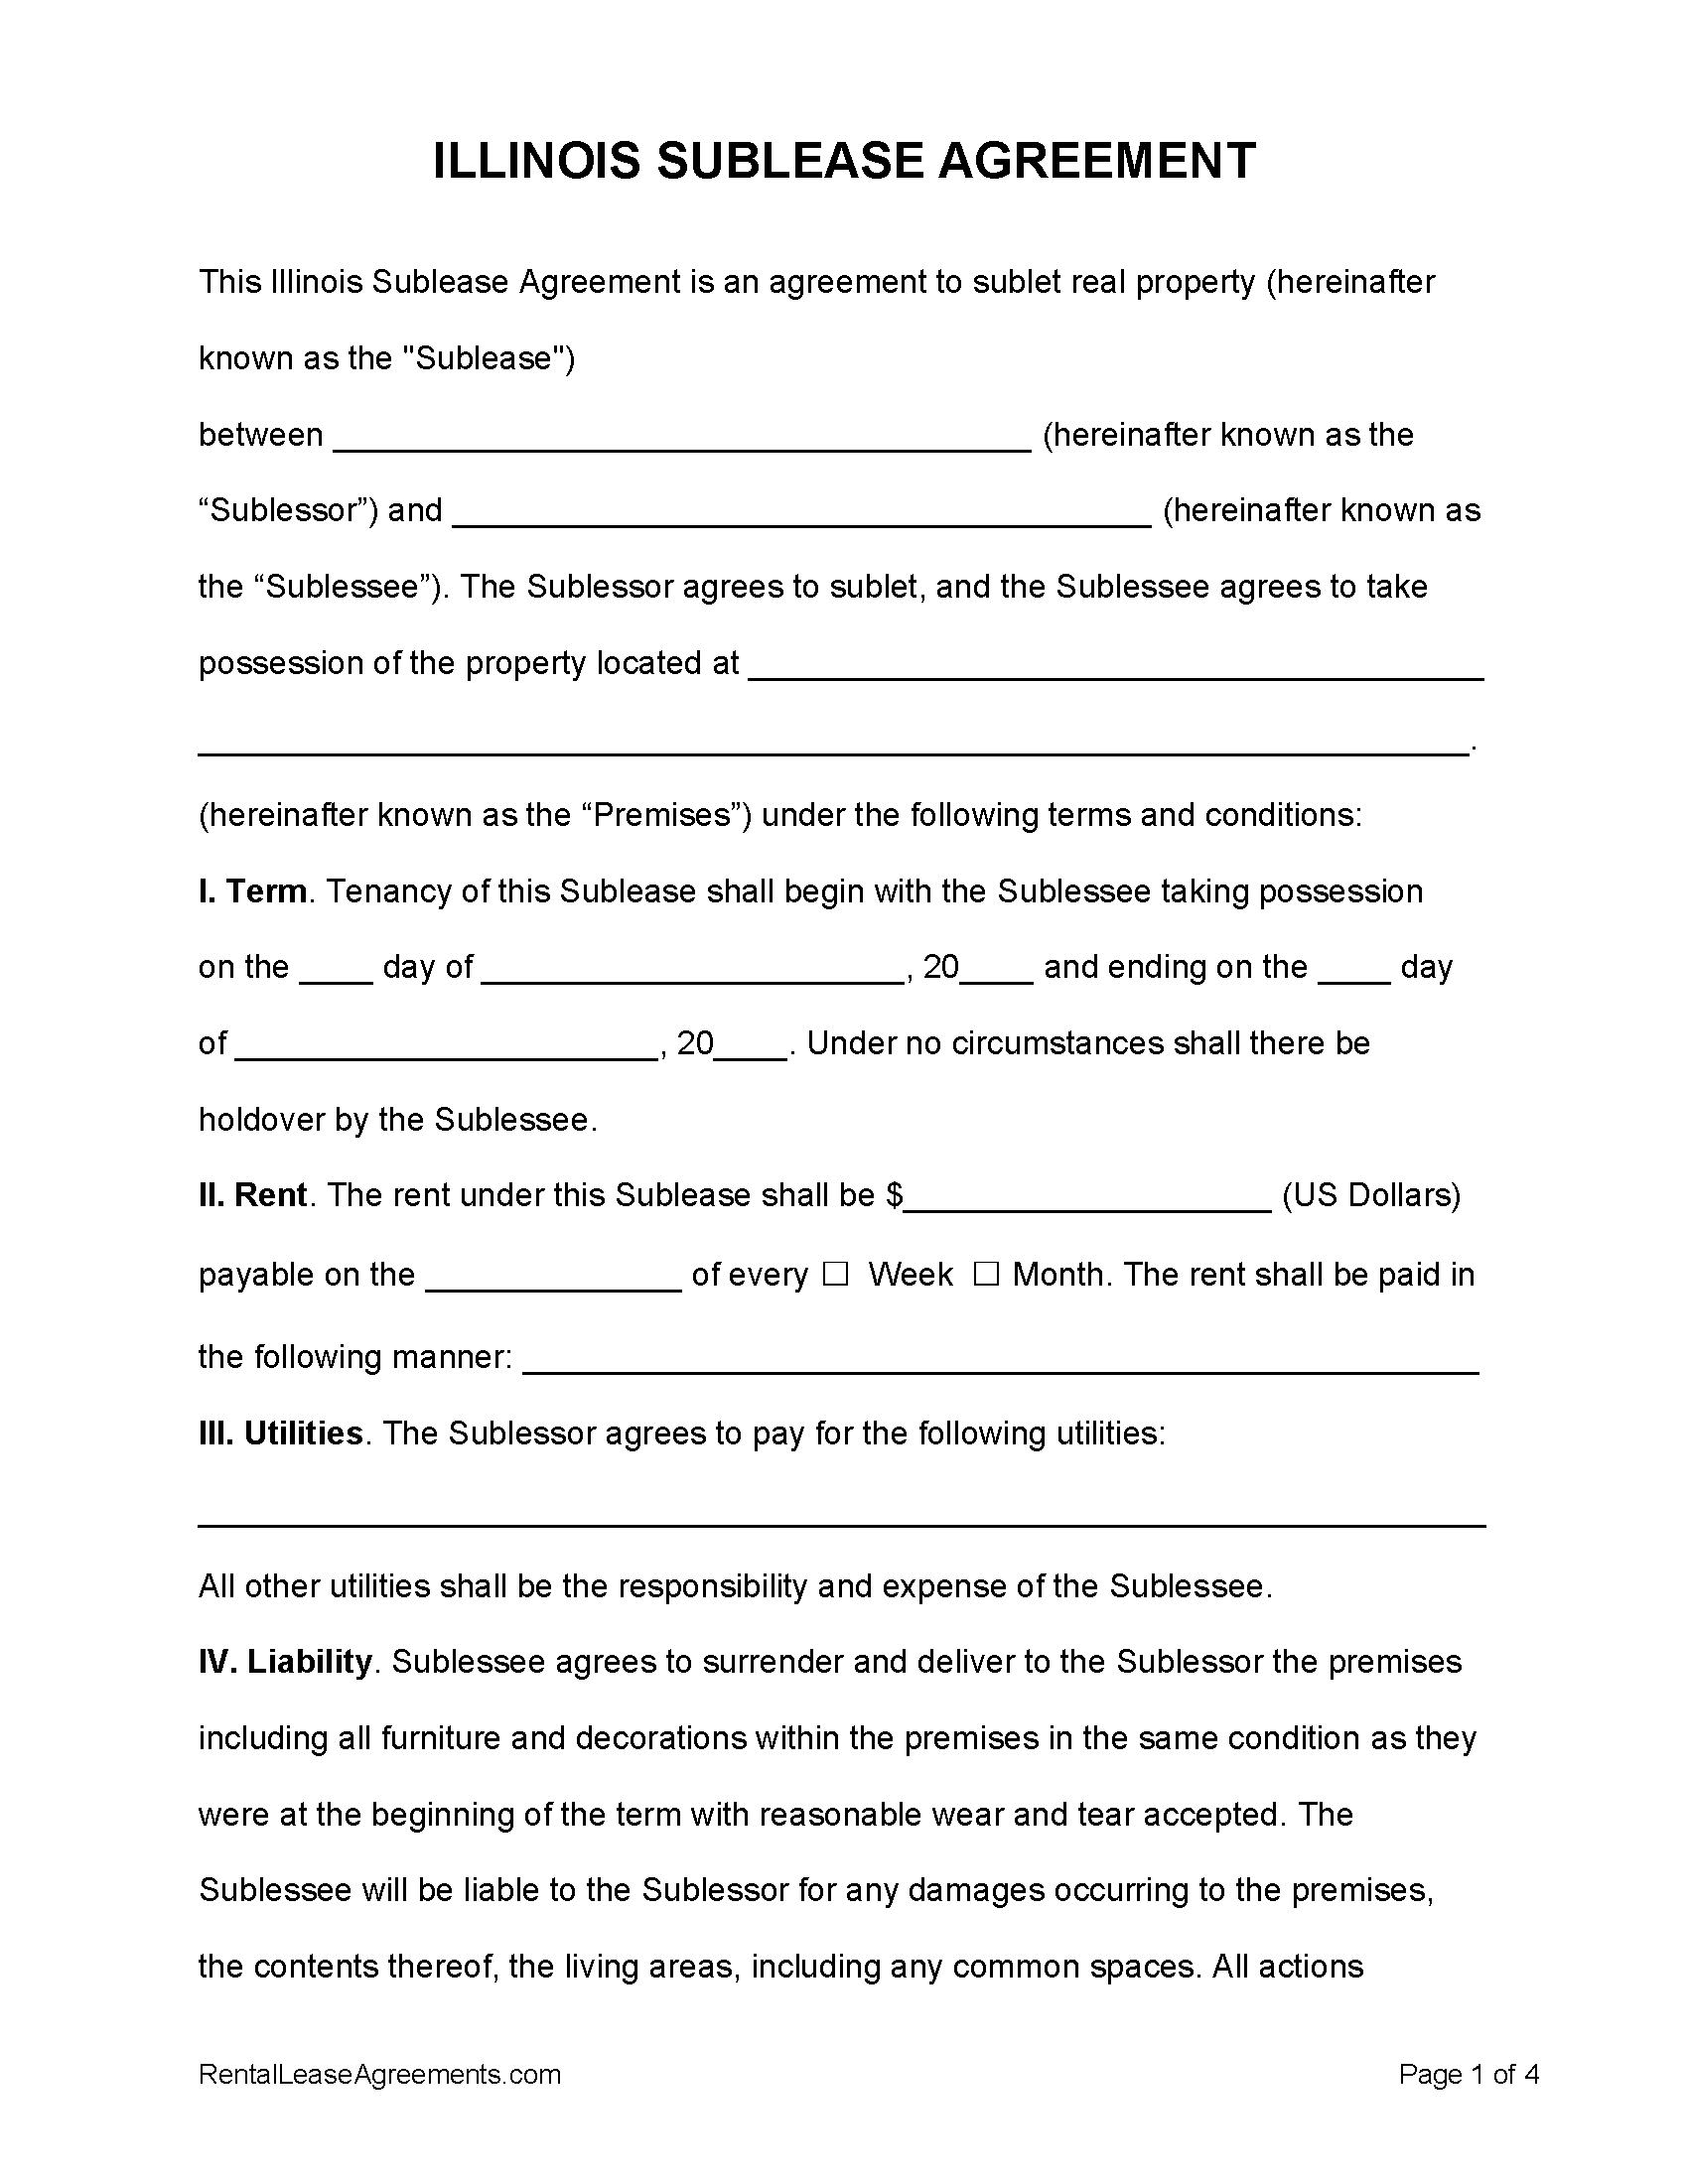 illinois-sublease-agreement-pdf-ms-word-free-printable-rental-lease-agreement-templates